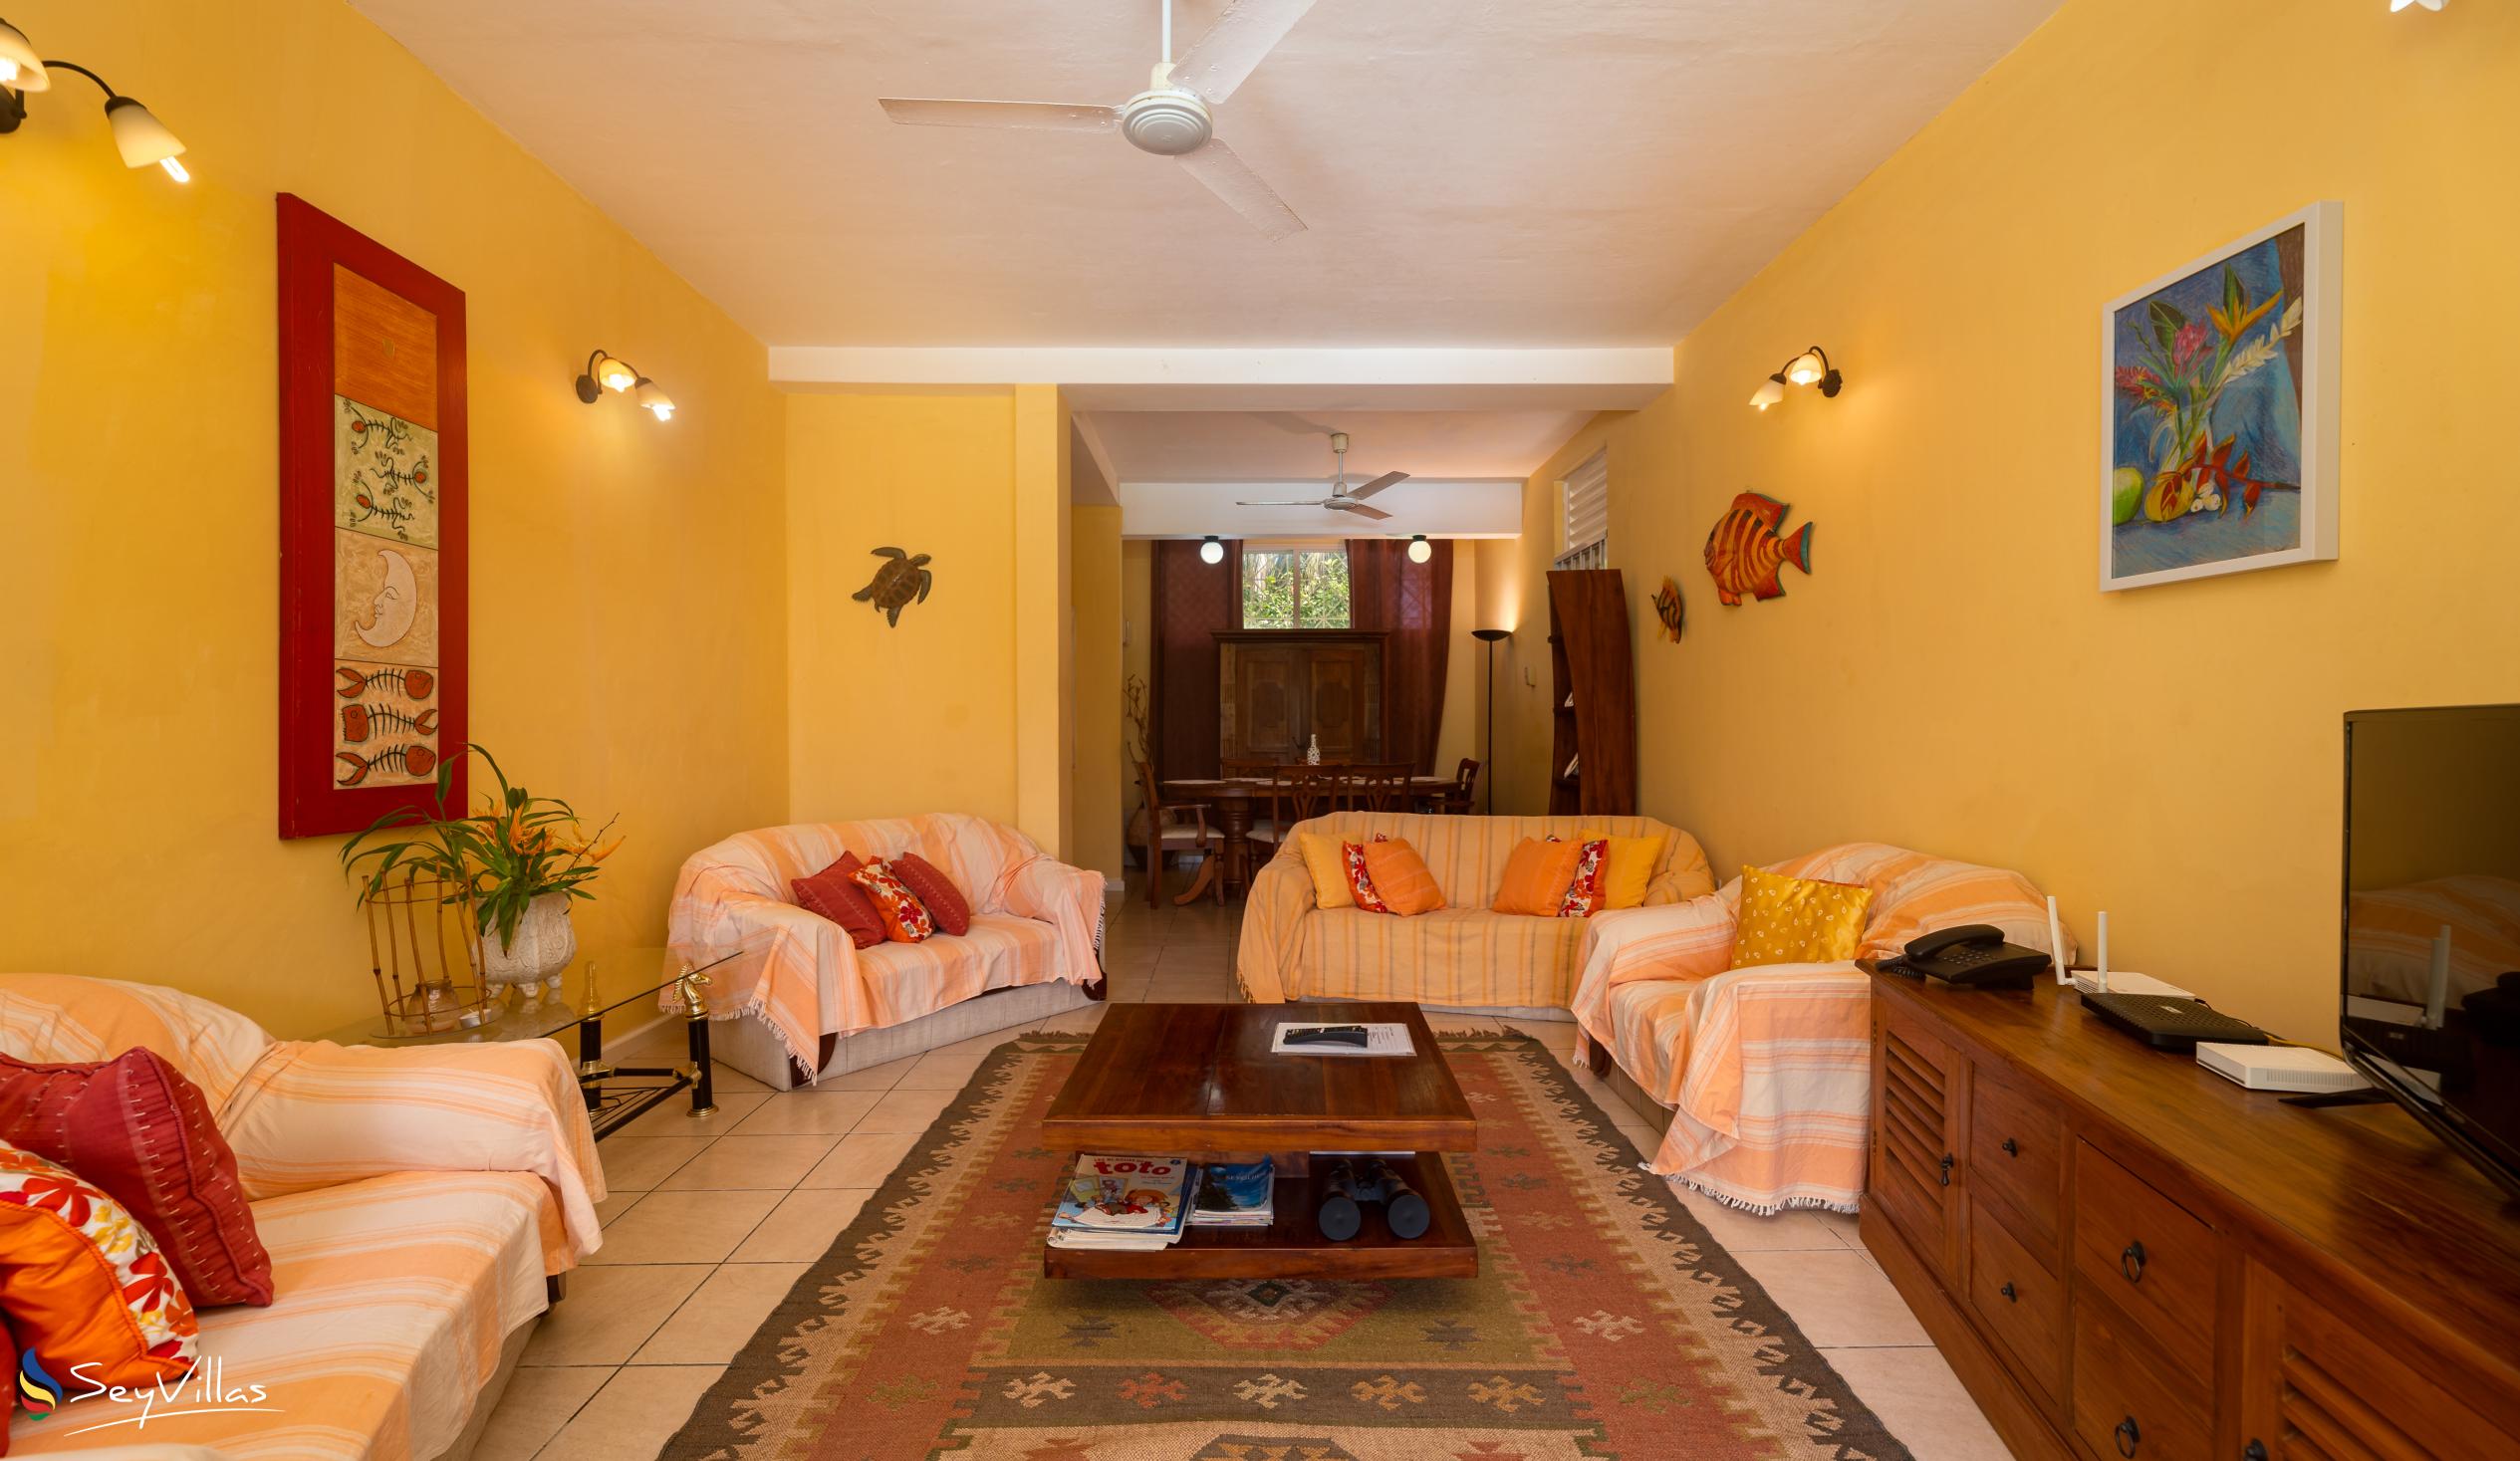 Photo 89: Residence Monte Cristo - 3-Bedroom Duplex - Mahé (Seychelles)